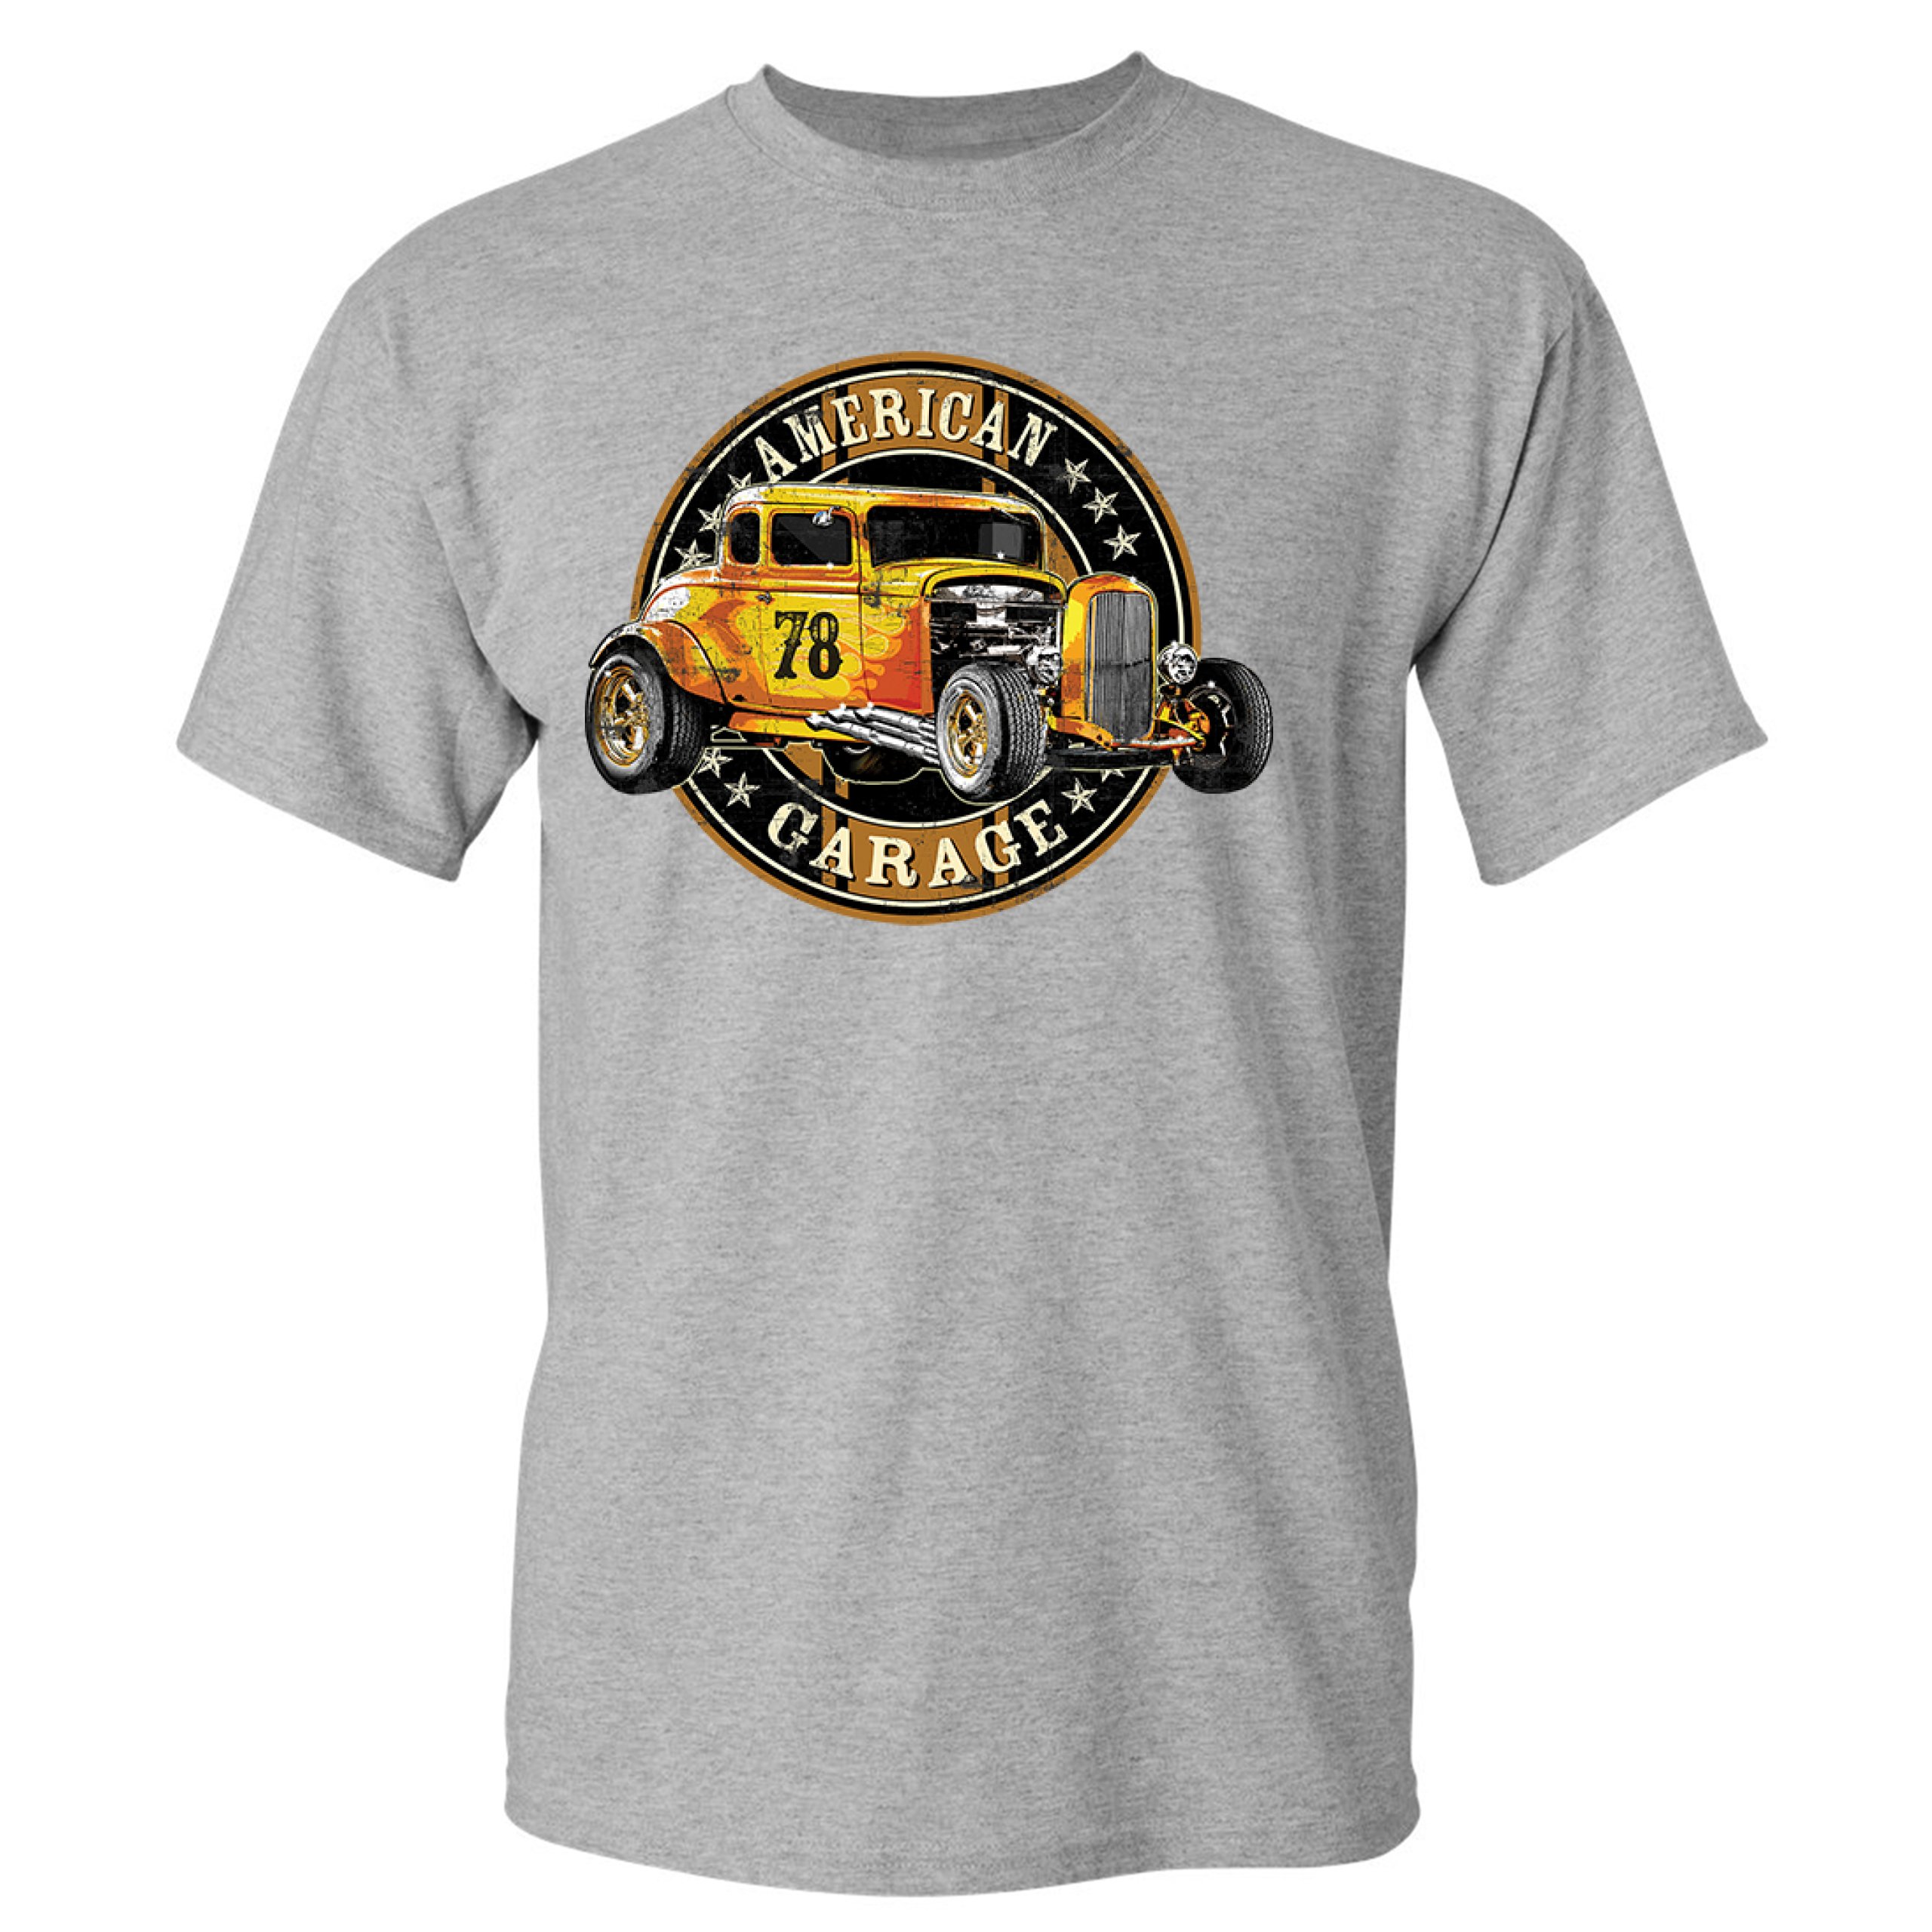 American Garage T-shirt Retro Hot Rod Vintage American Muscle Men's Tee ...